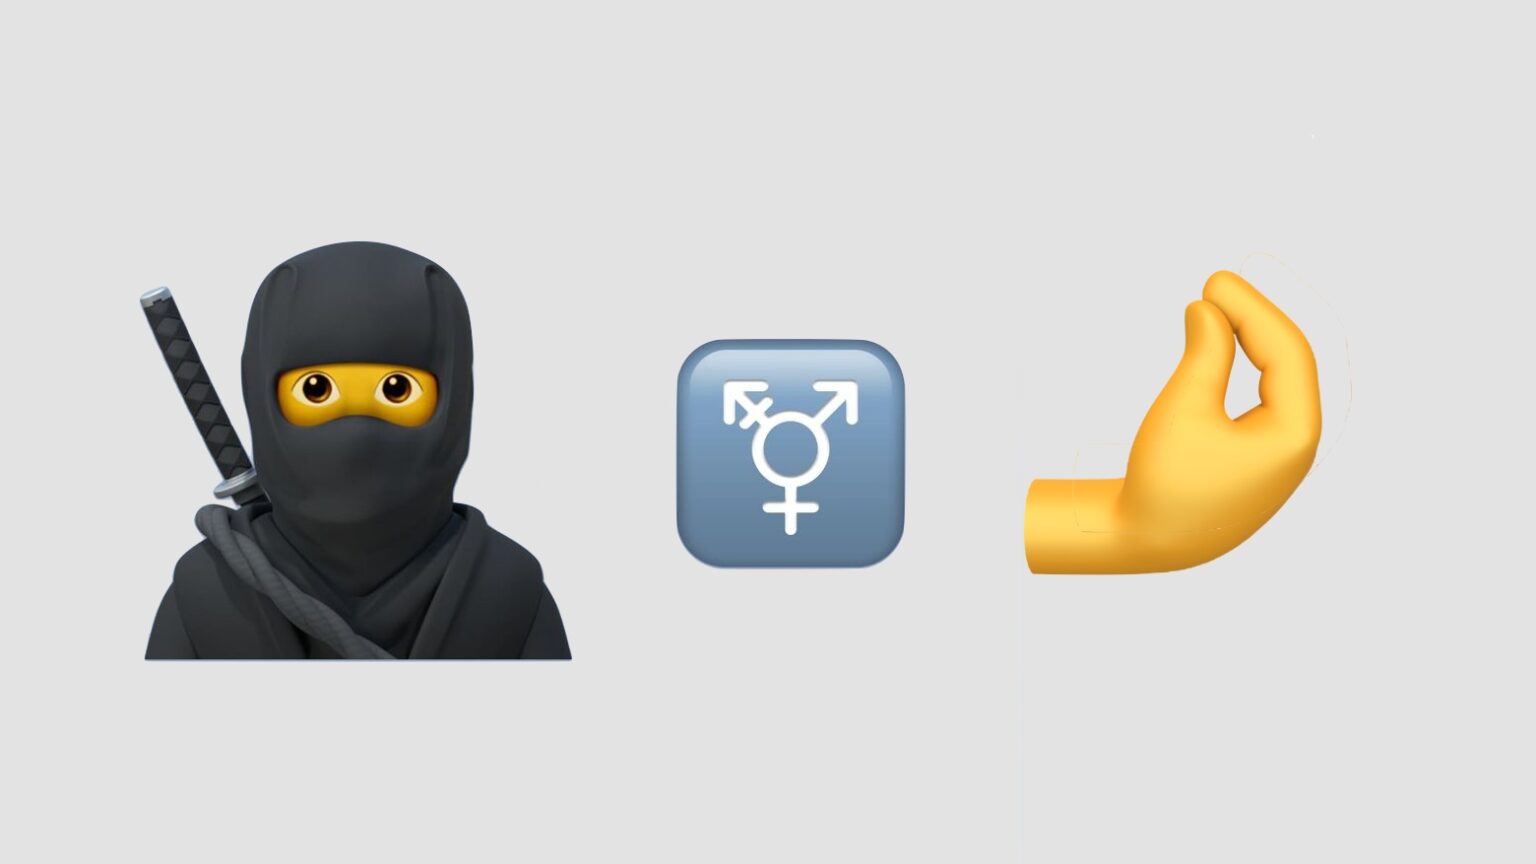 iOS 14 emoji include a ninja, the transgender symbol, and an Italian gesture.